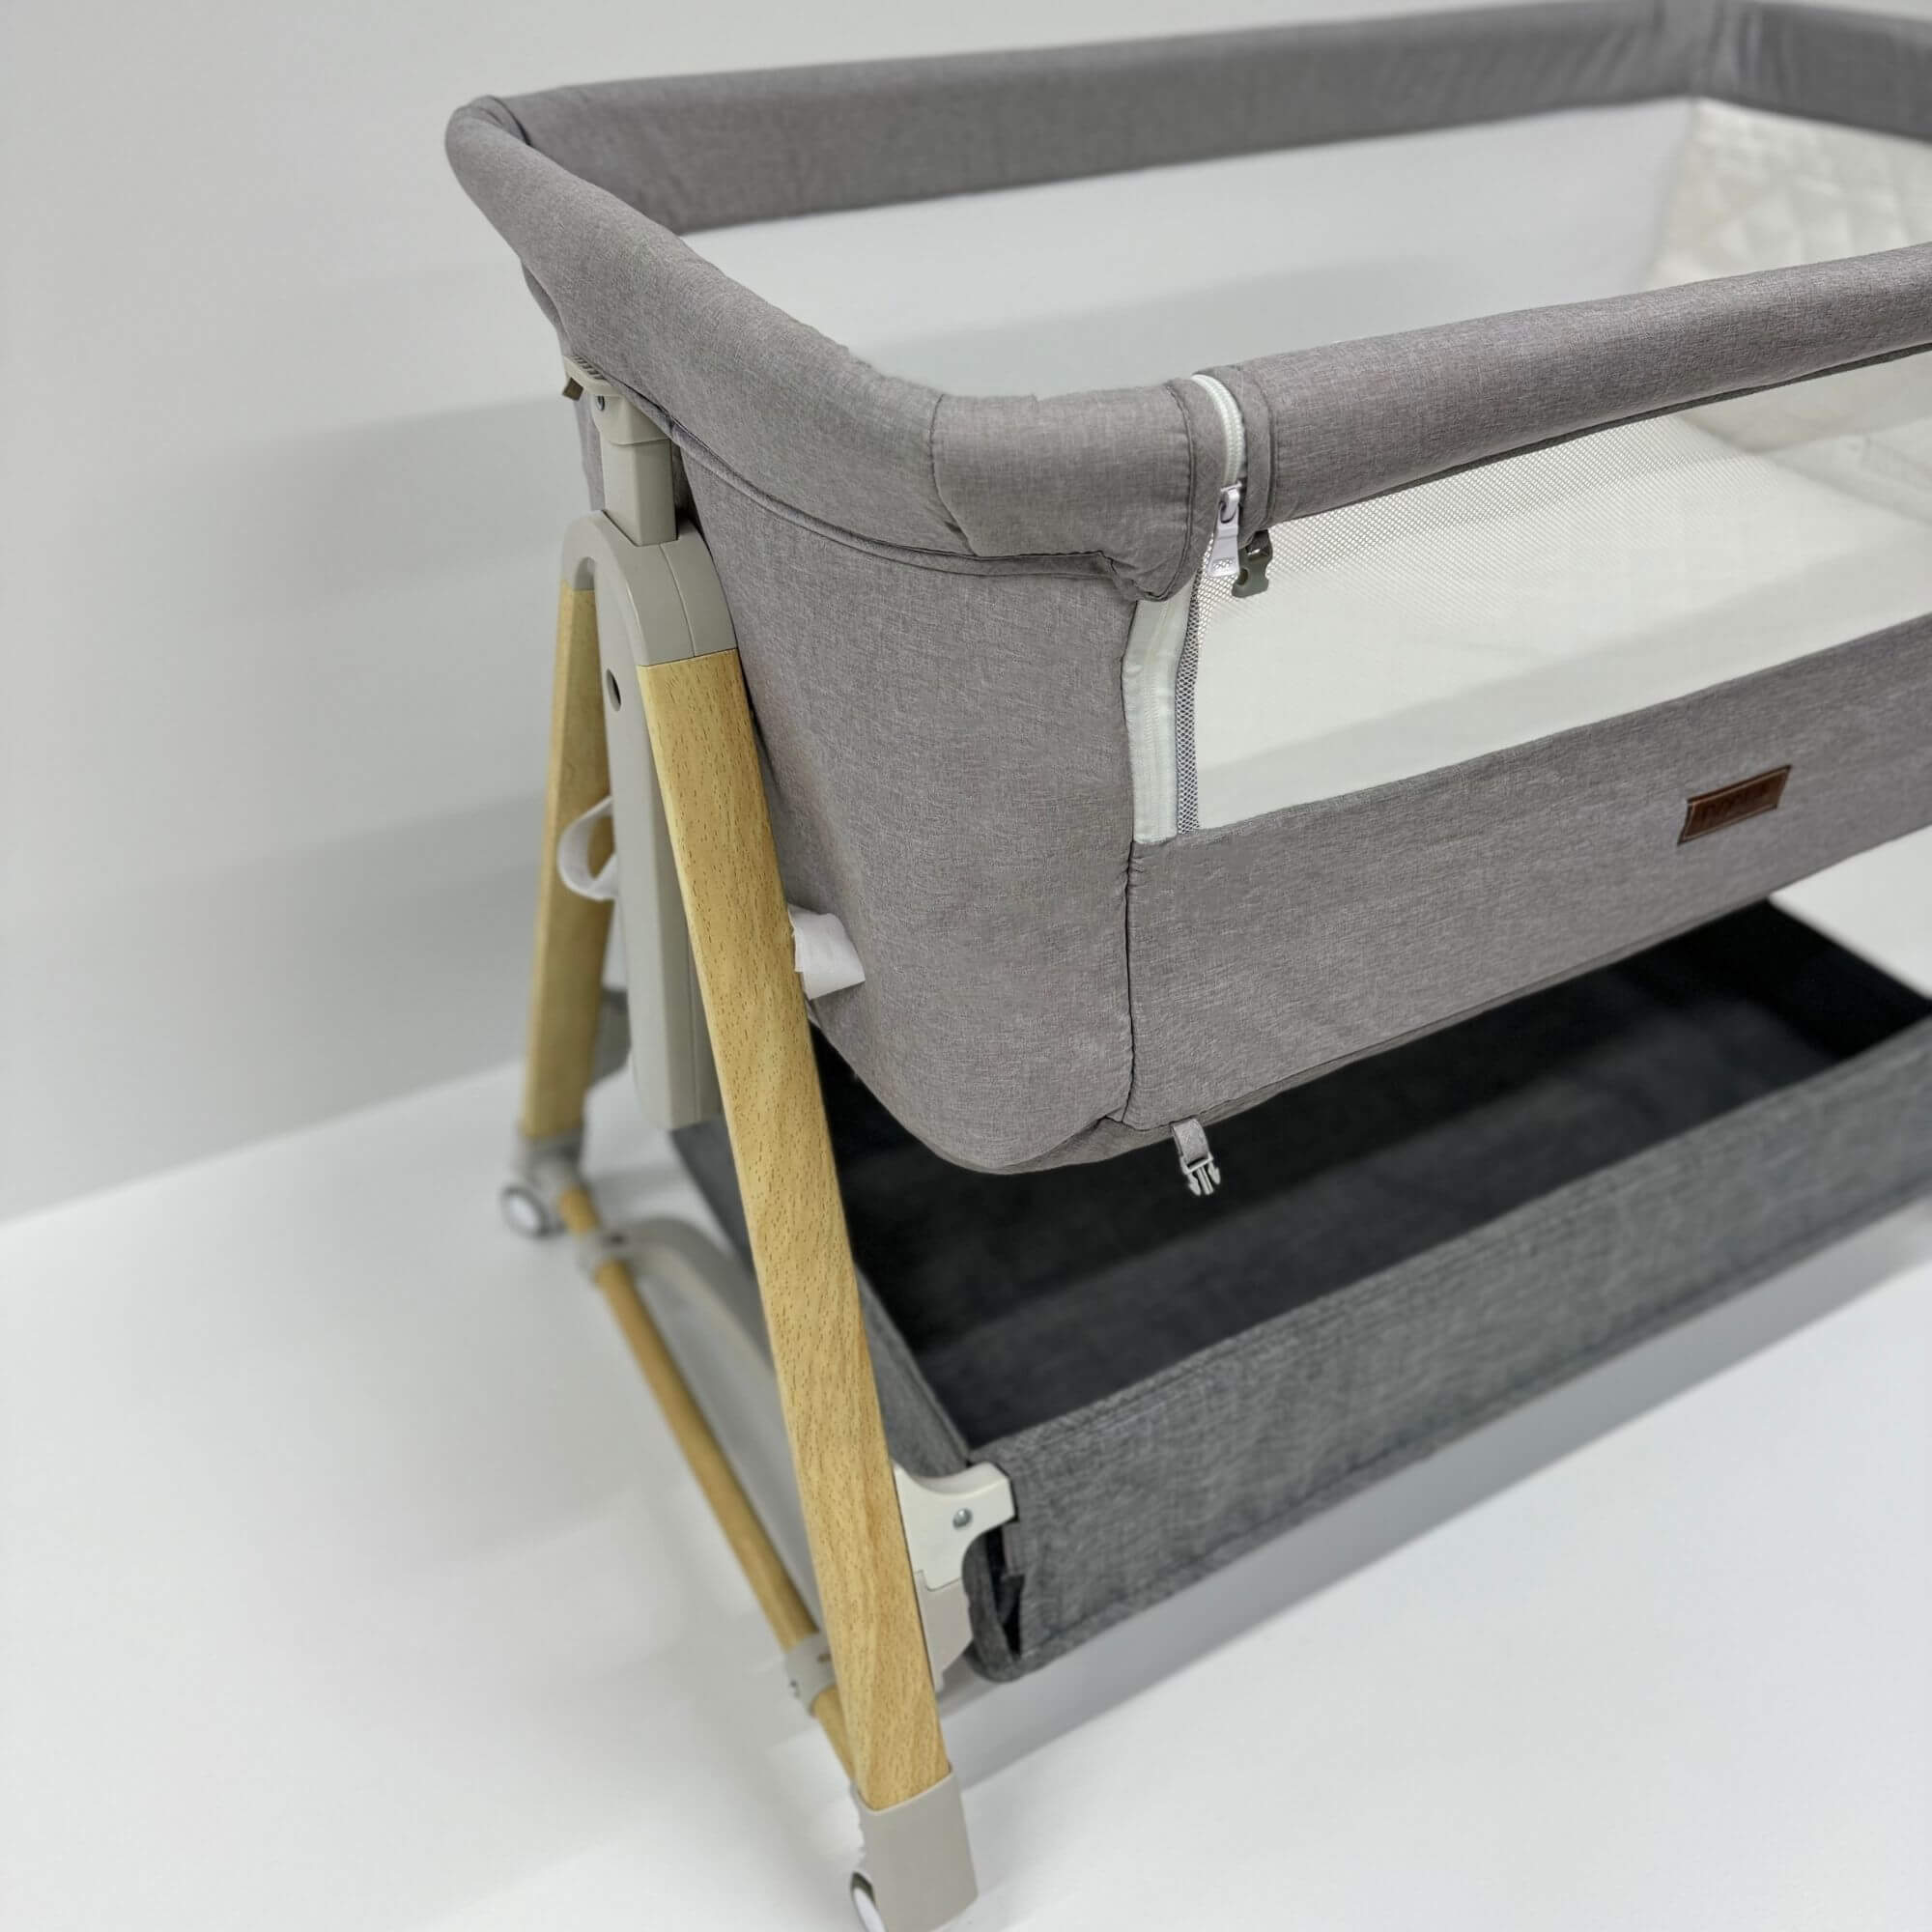 noola high chair and co-sleeper bassinet bundle